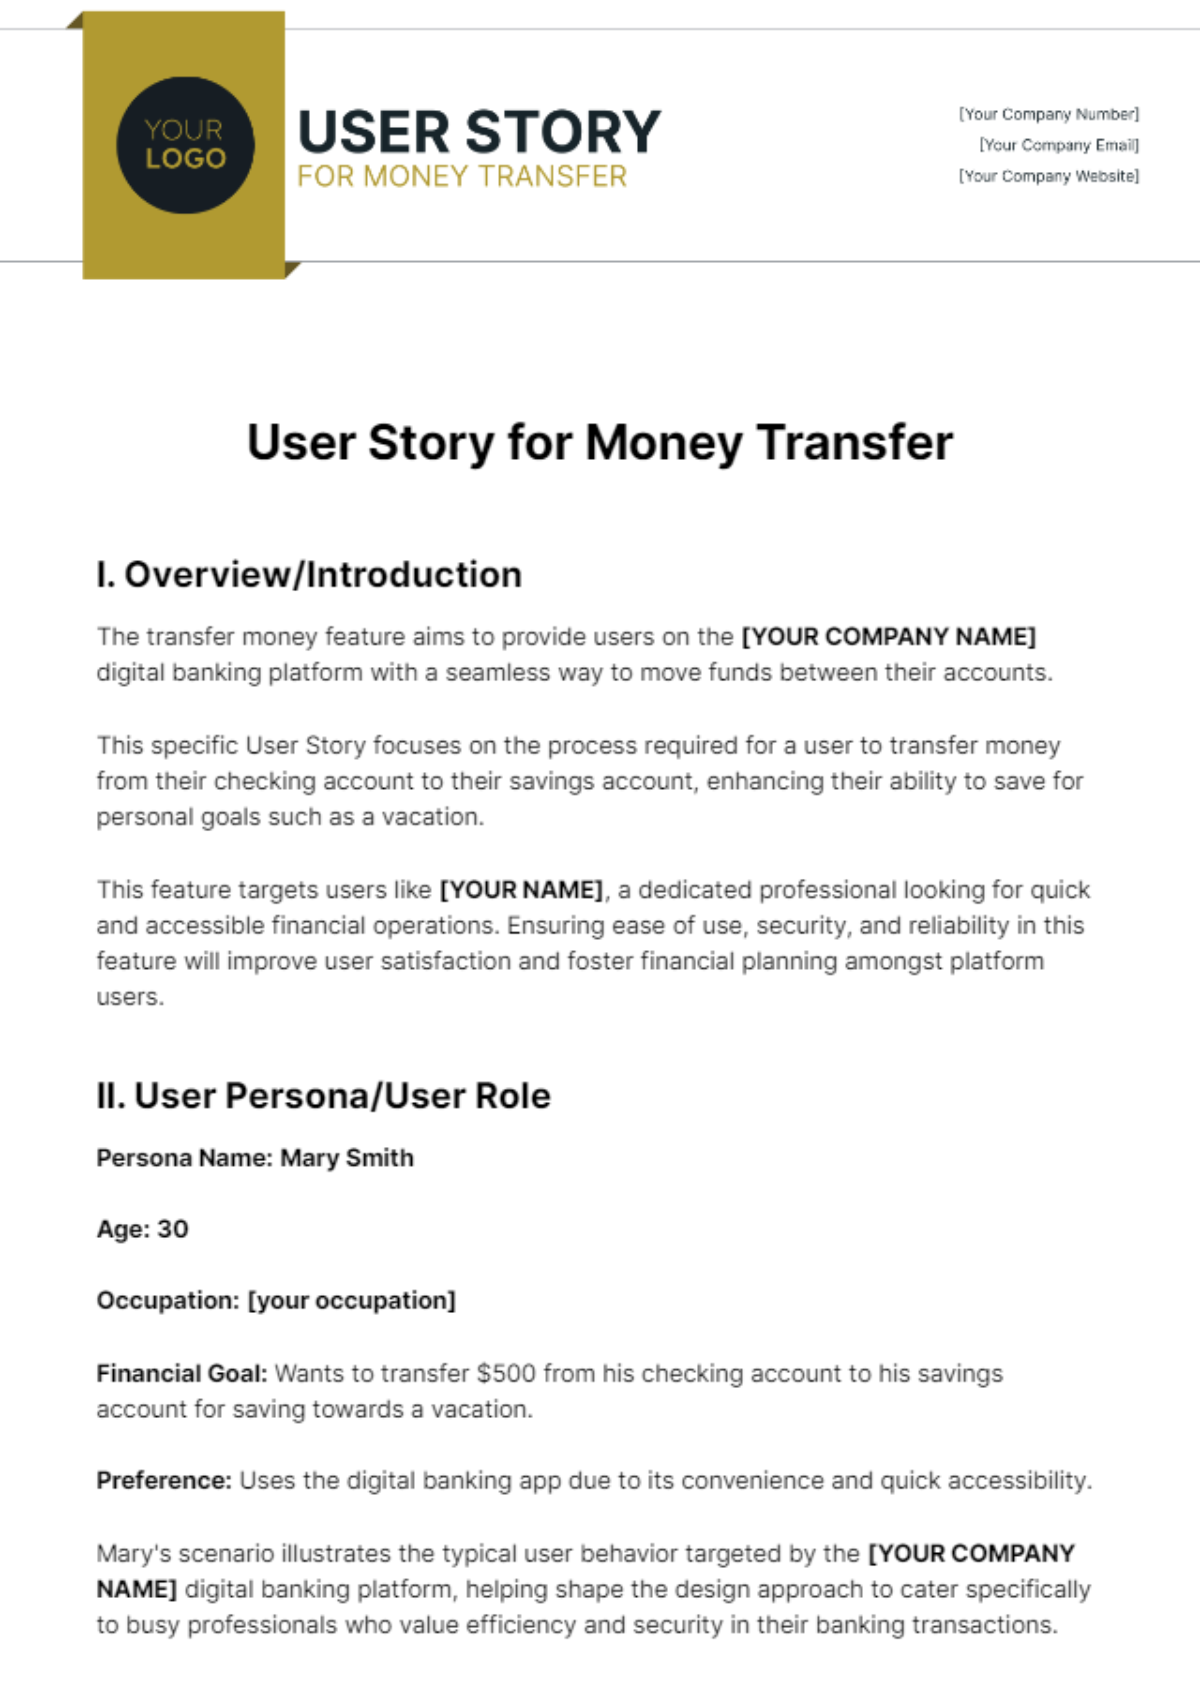 User Story For Transferring Money Template